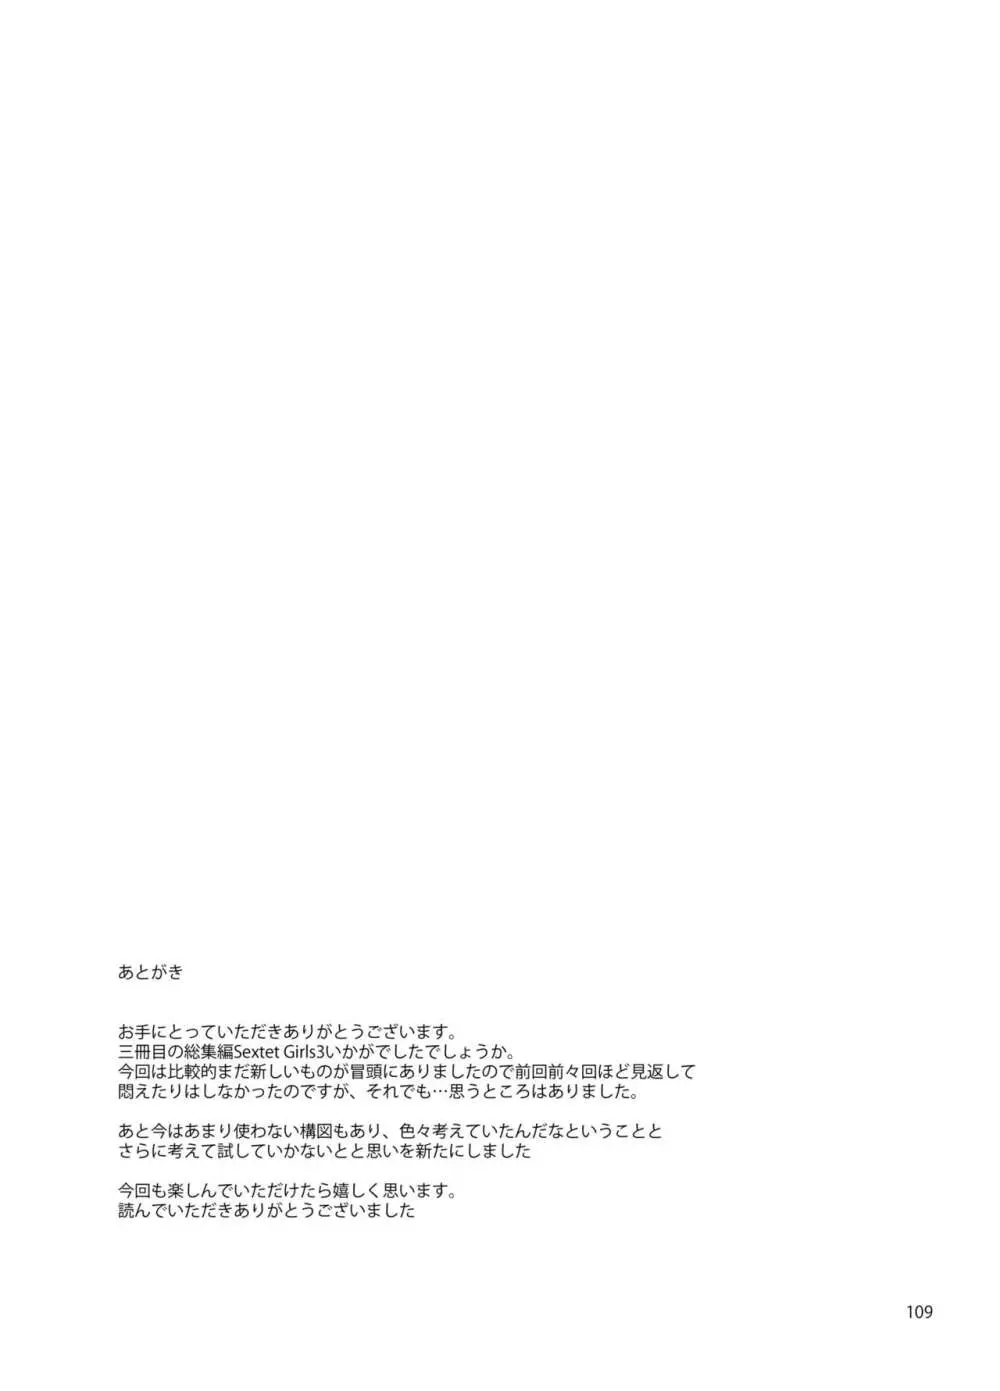 Sextet Girls 3 -スミヤ同人総集編- 110ページ